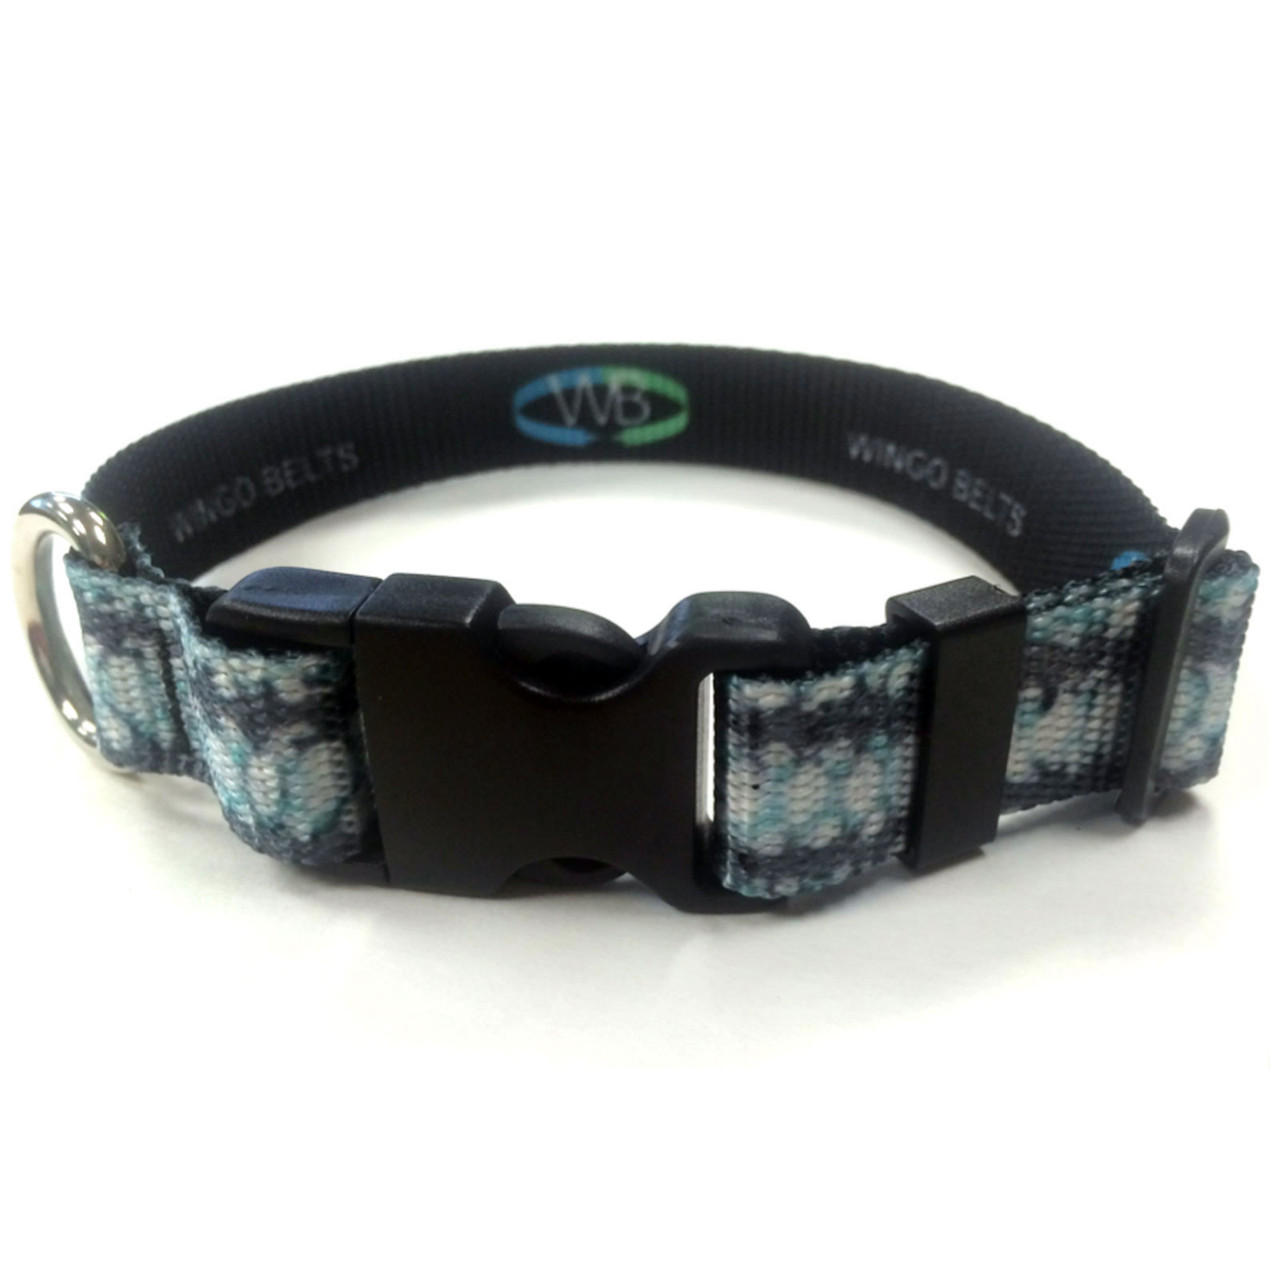 Wingo Belts Dog Collars - AvidMax